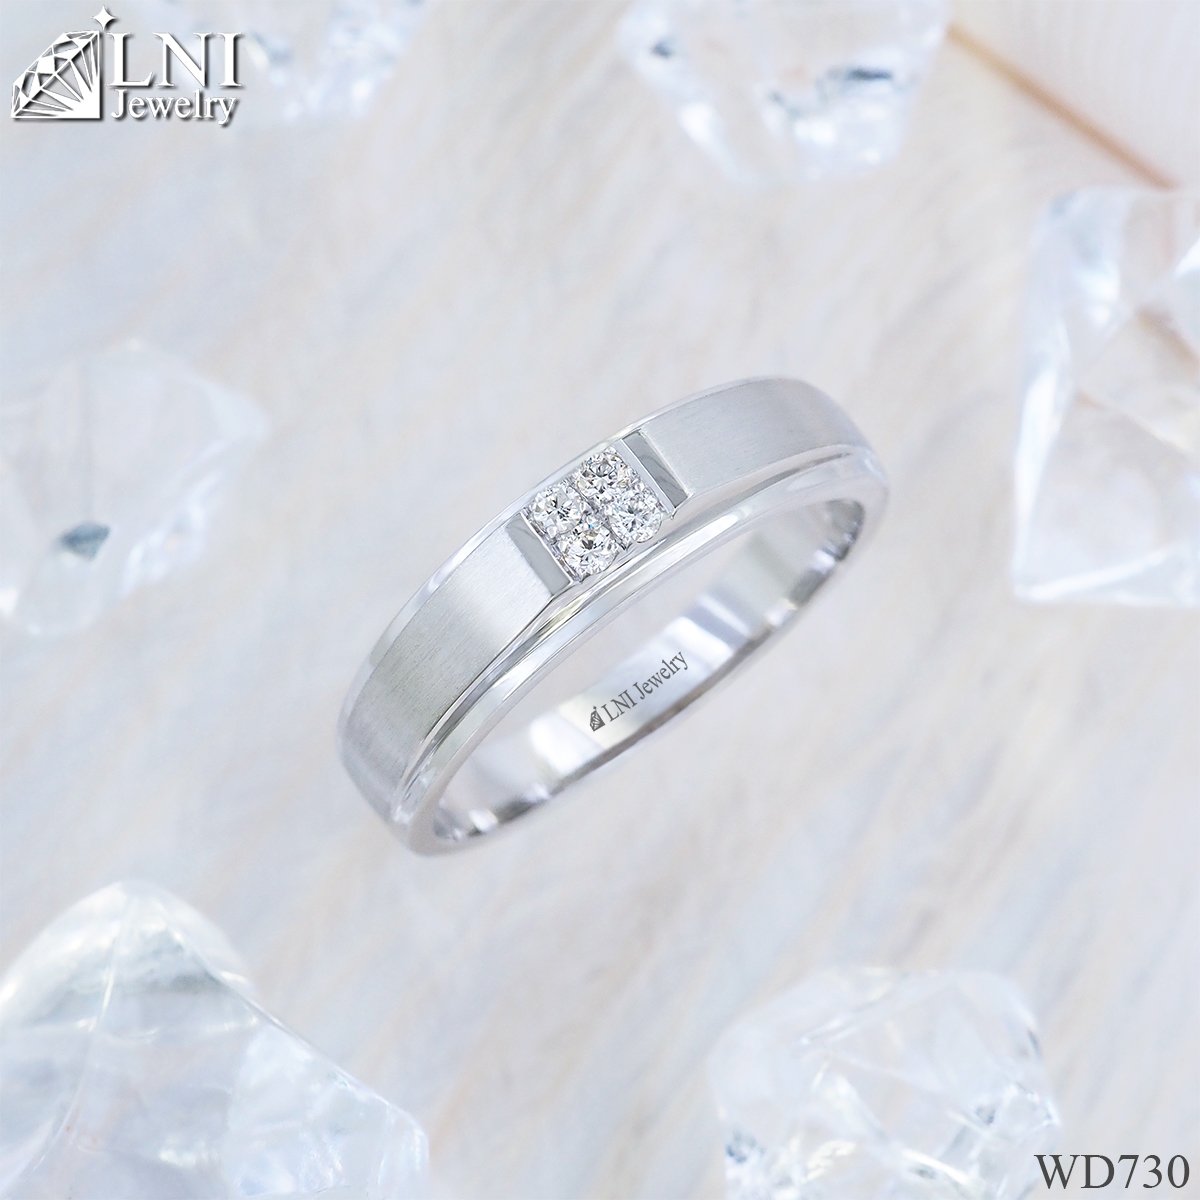 WD730 Diamond Ring